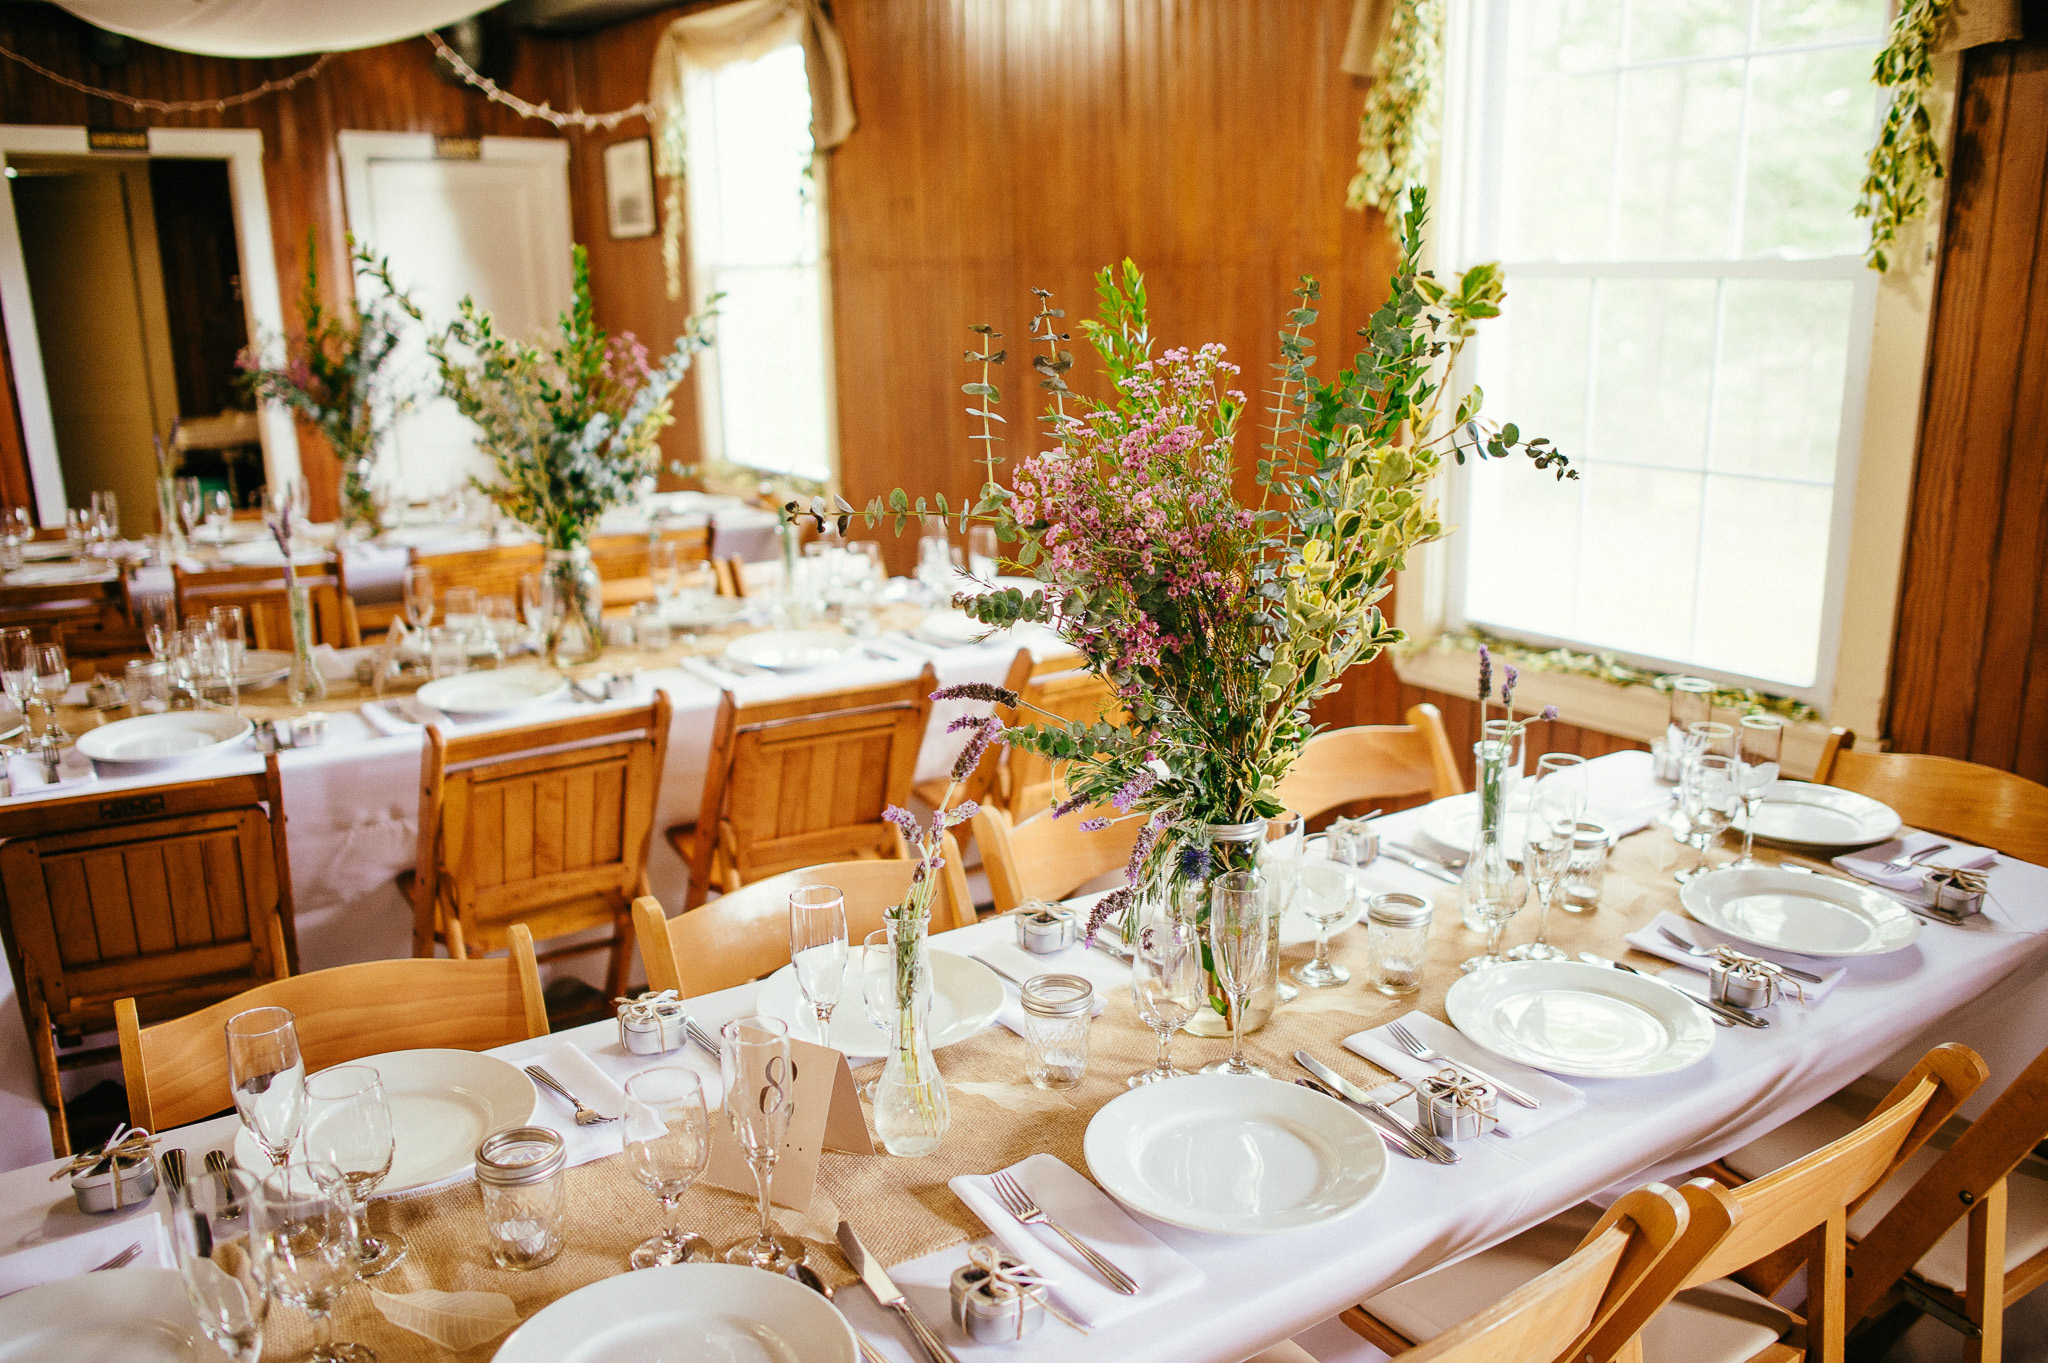   Sprague Hall Wedding Reception Cape Elizabeth&nbsp;Maine, DIY Lavender and Natural Flowers  